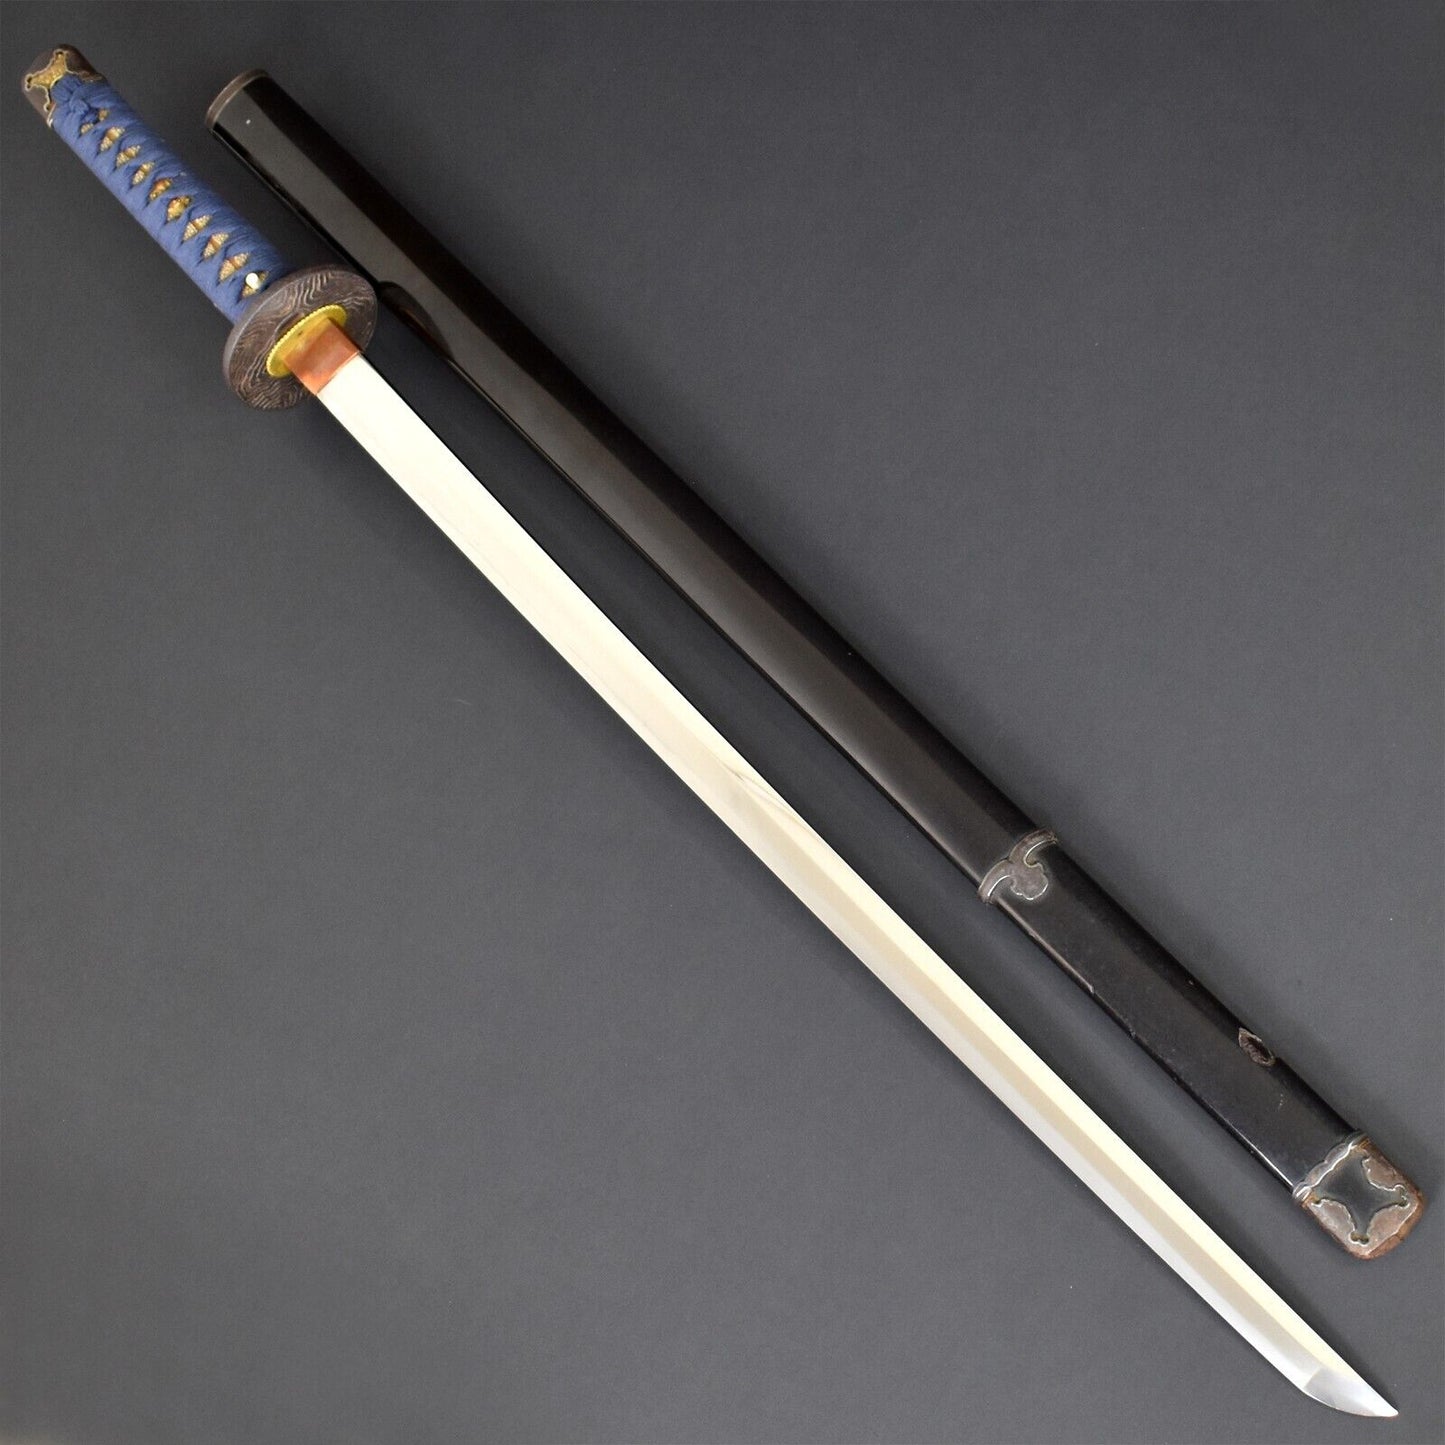 Original Vintage Japanese Sword Collectible Nihonto Katana Samurai Tamahagane Blade Edo Period Legacy Certified.